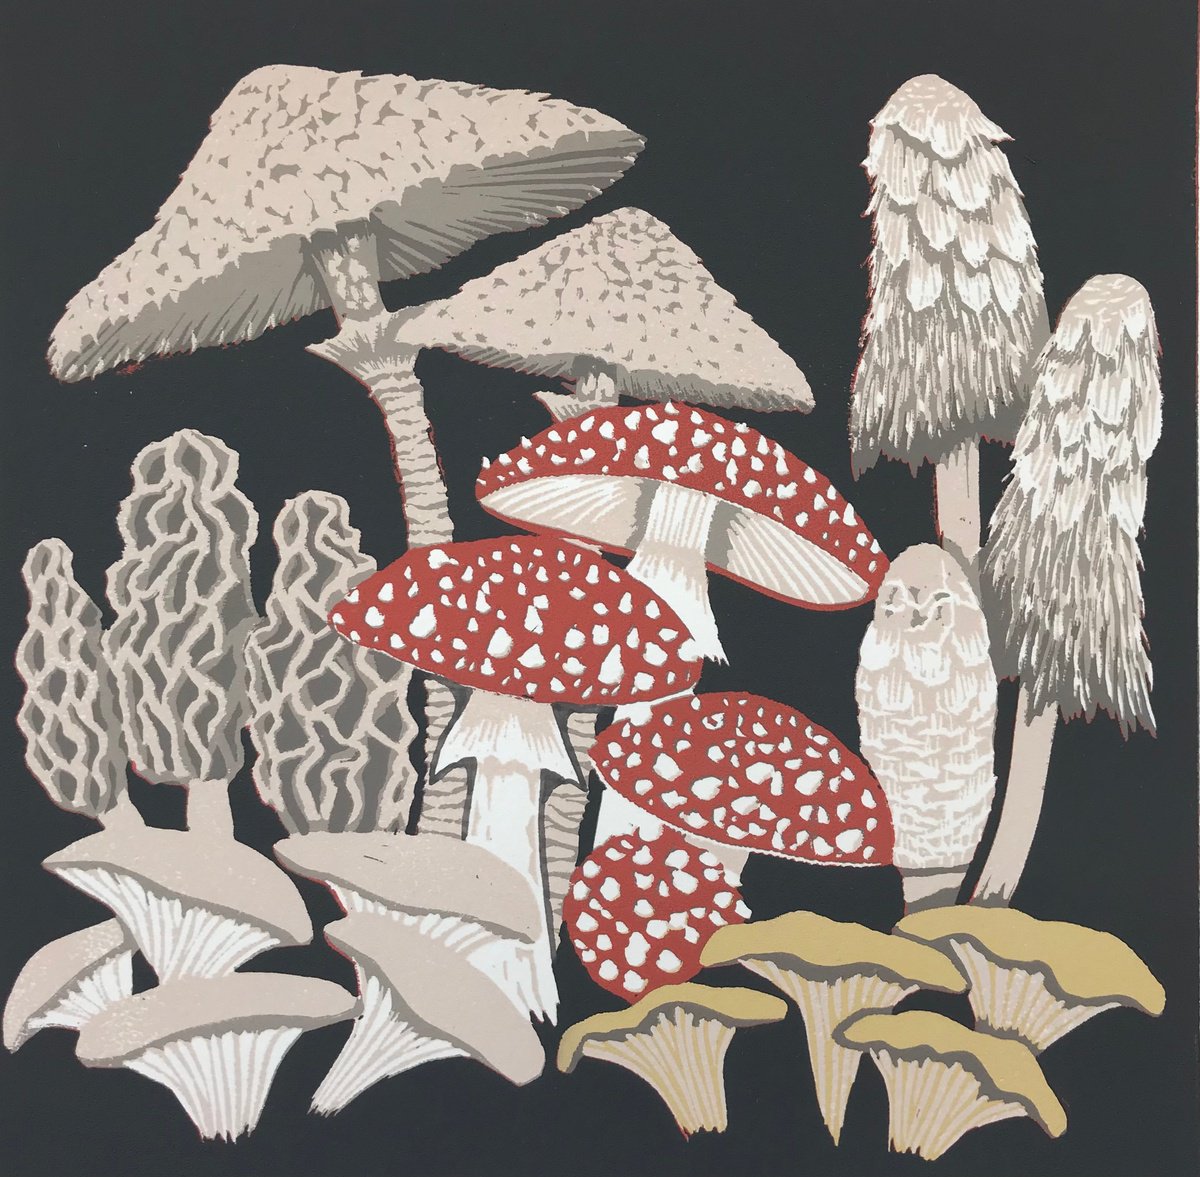 Mushroom medley by Gerry Coles